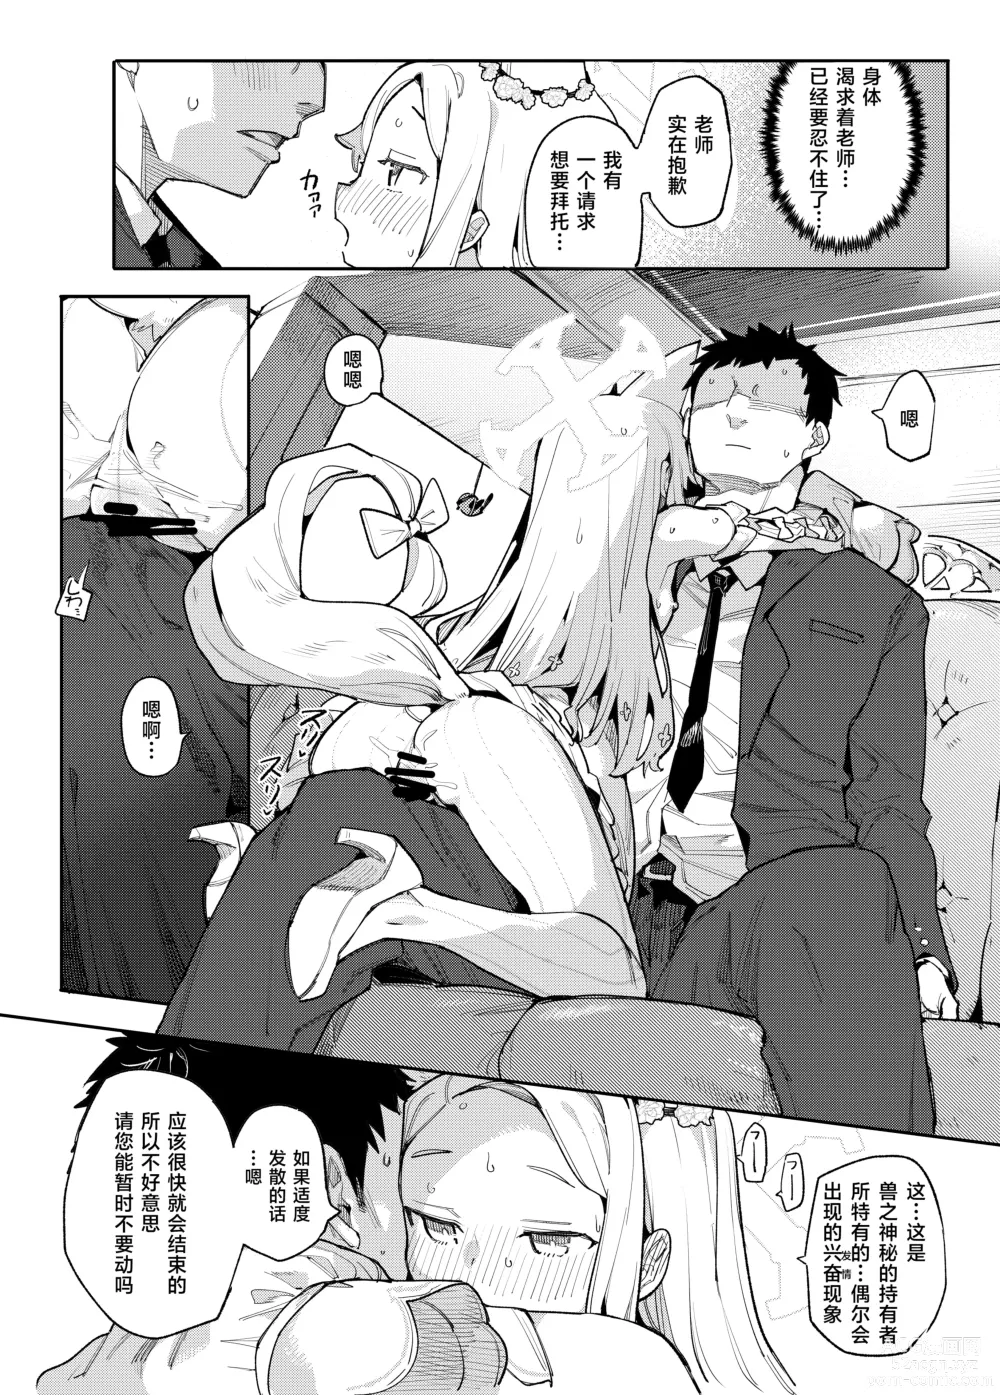 Page 5 of doujinshi 雌性狐狸看到了充满色情的未来